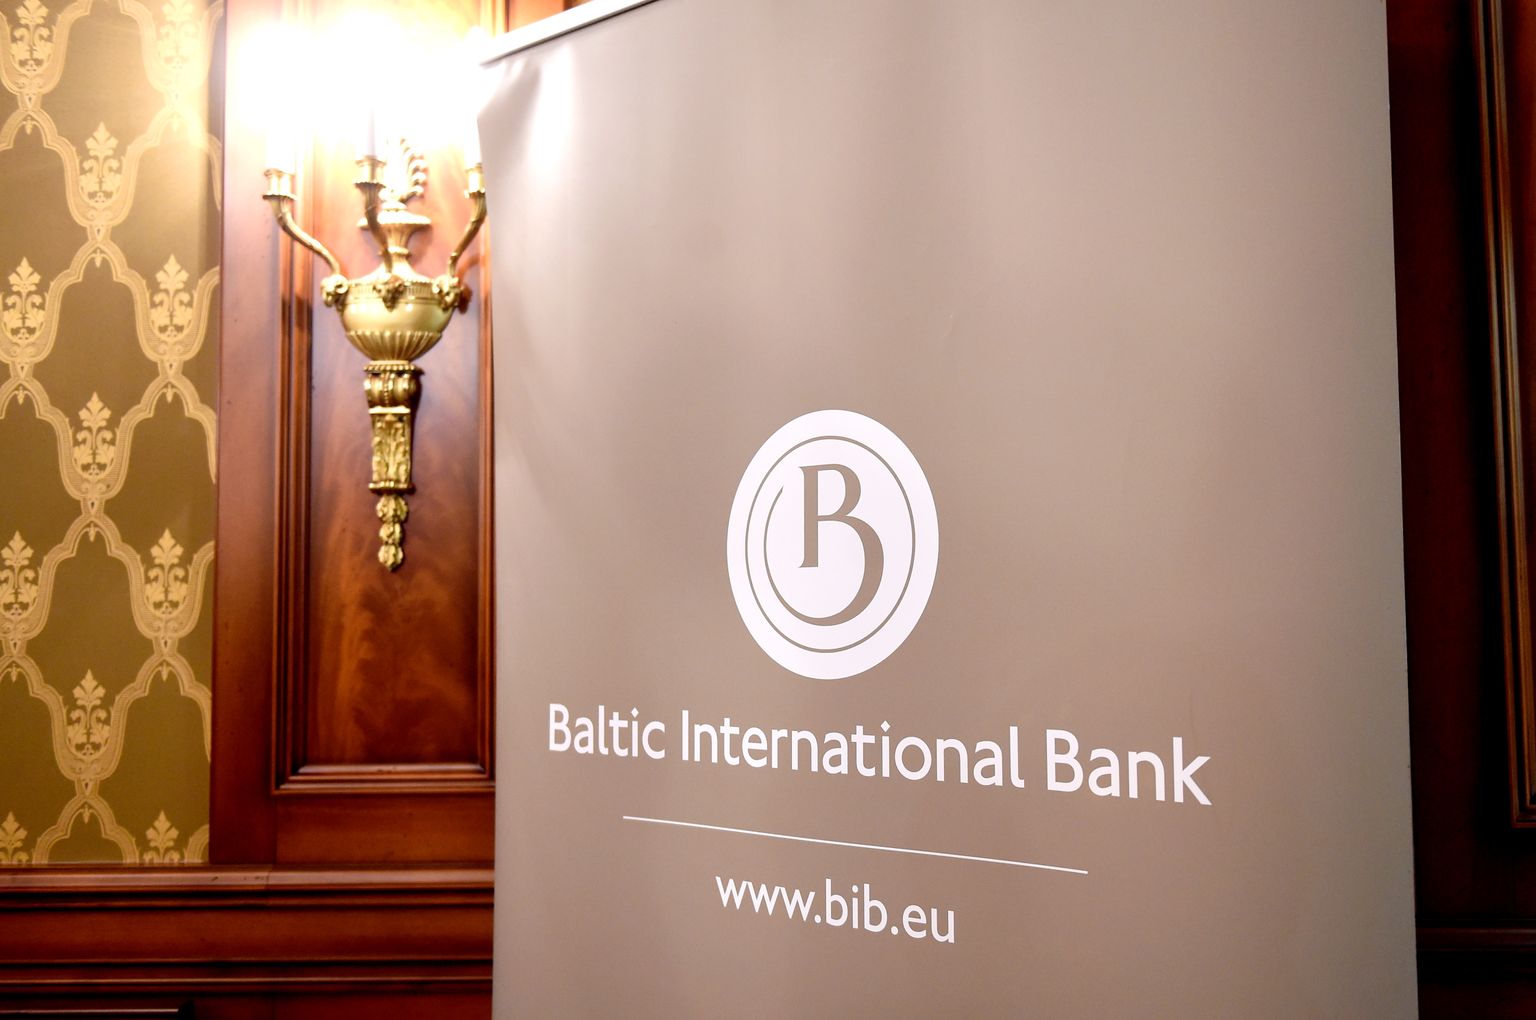 Bankas "Baltic International Bank" uzraksts.